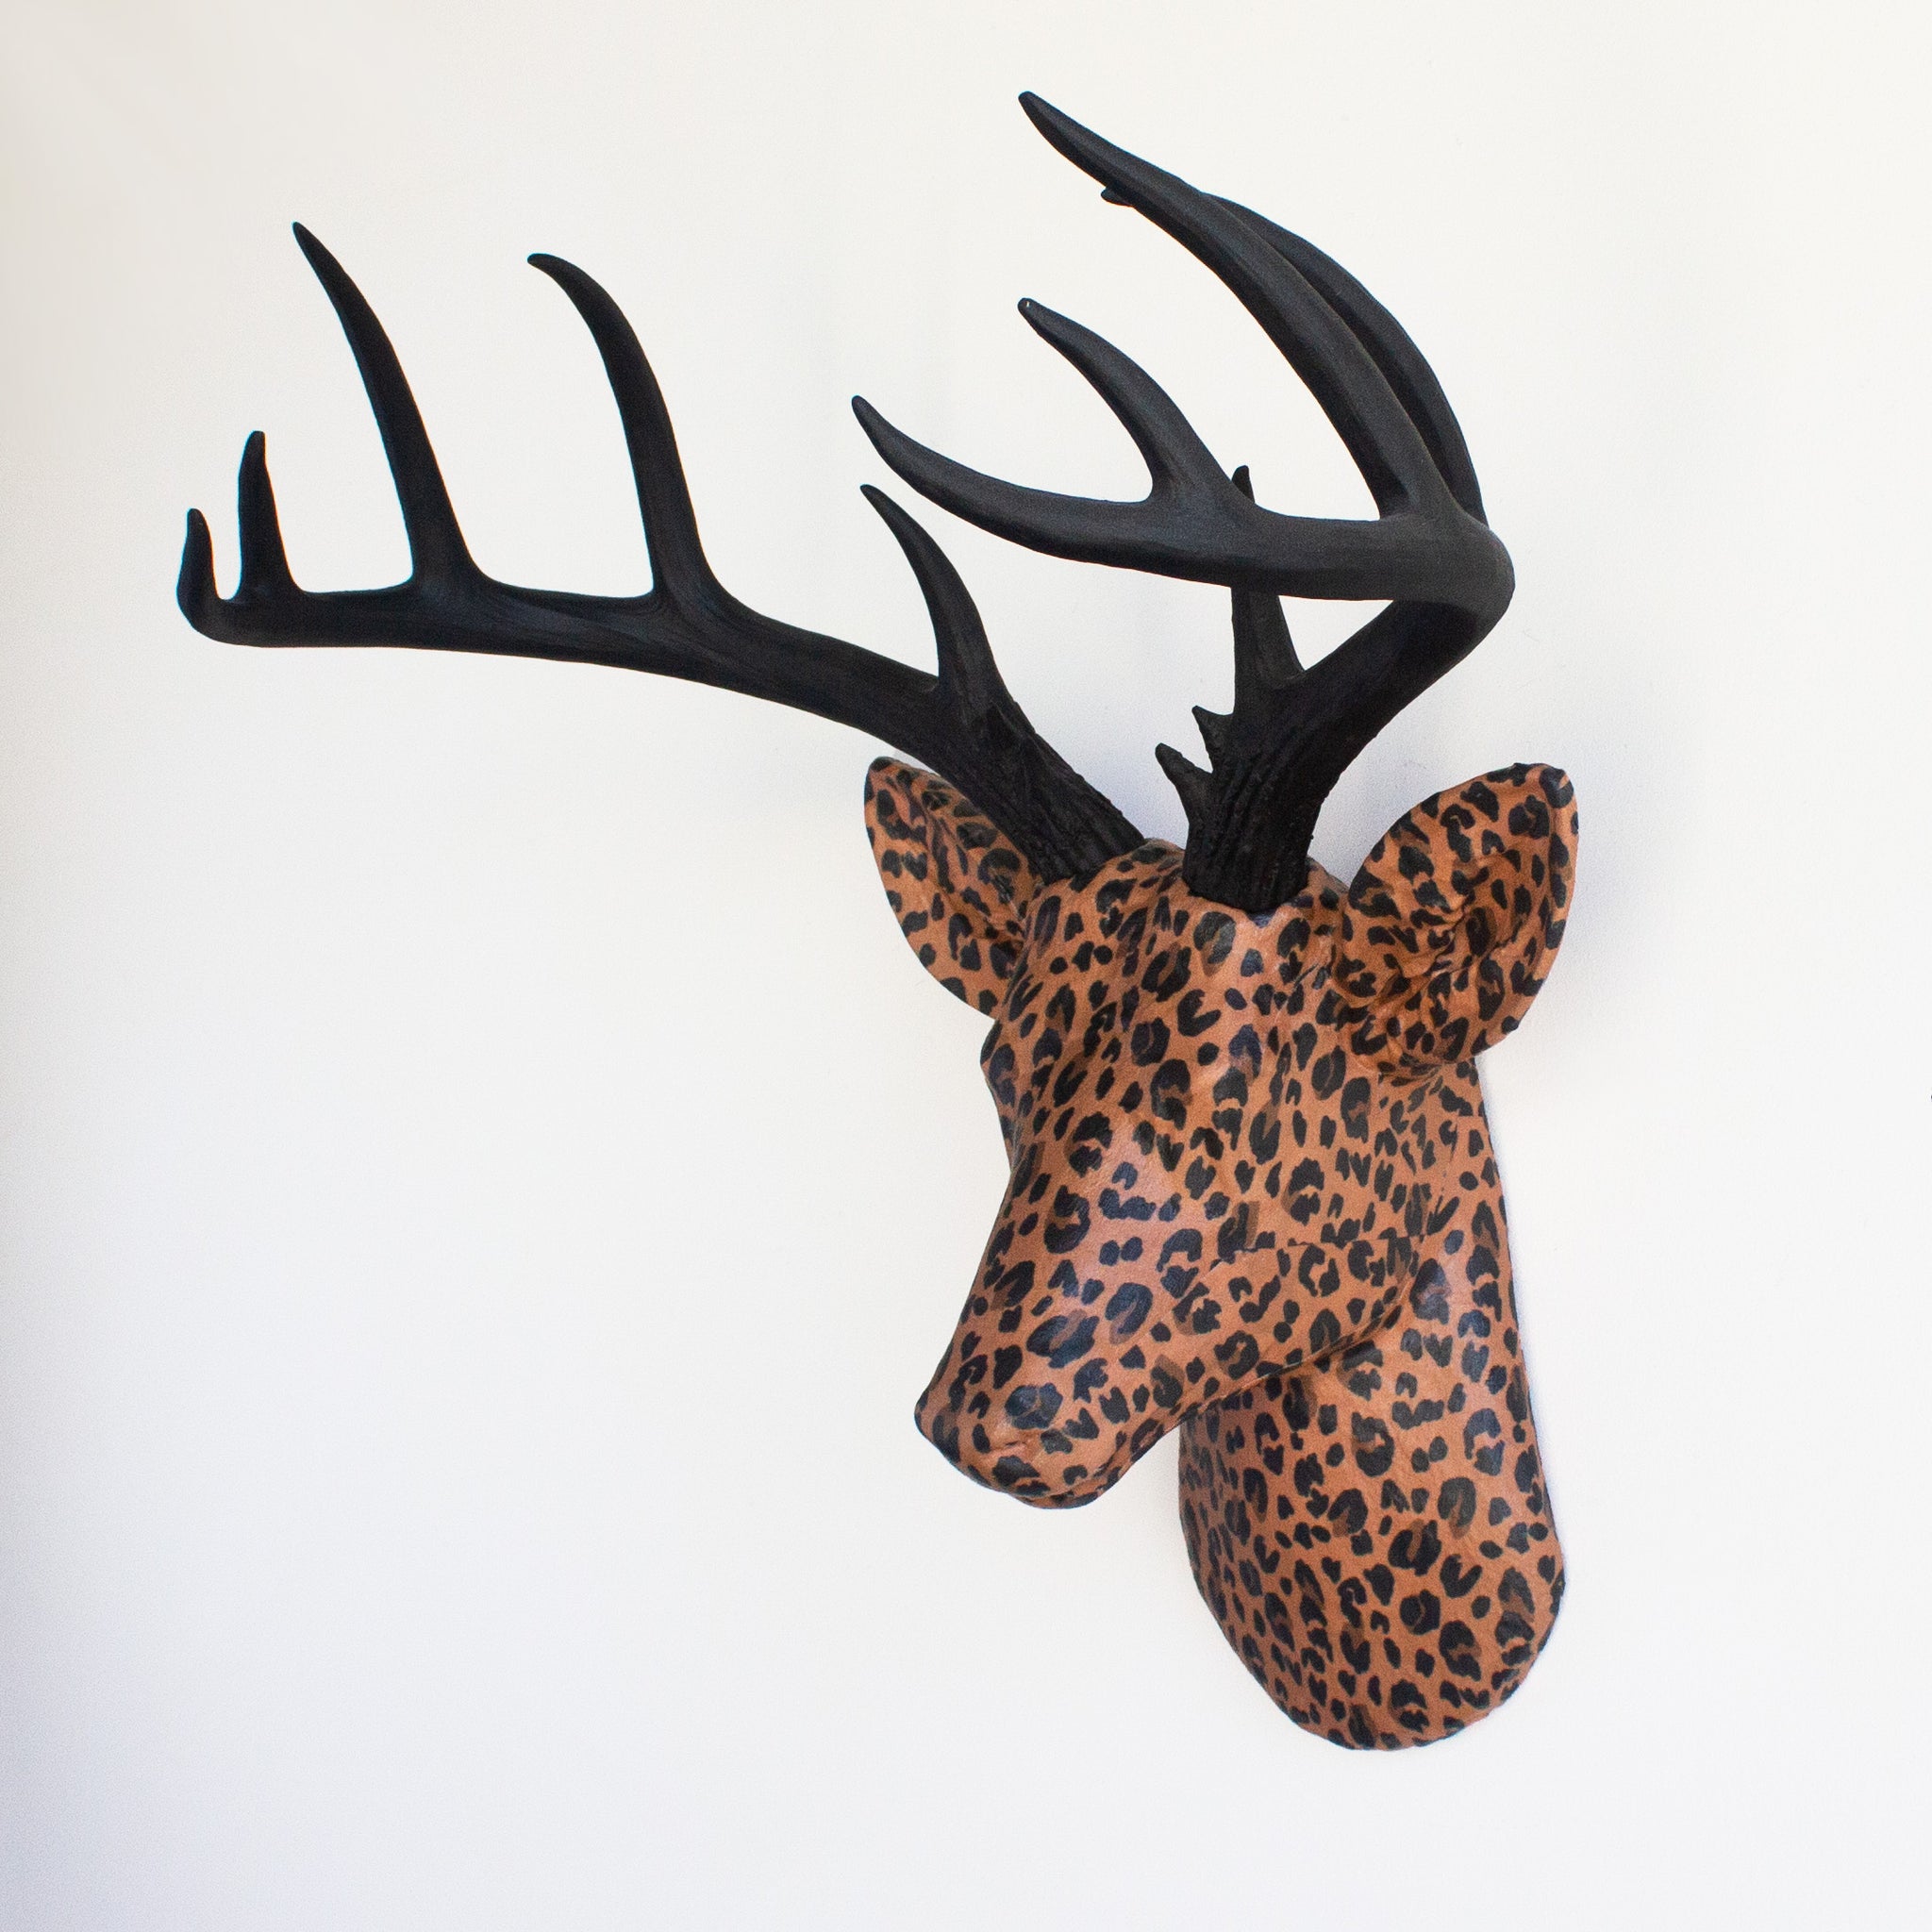 Fabric Deer Head - Leopard Print Fabric Deer Head